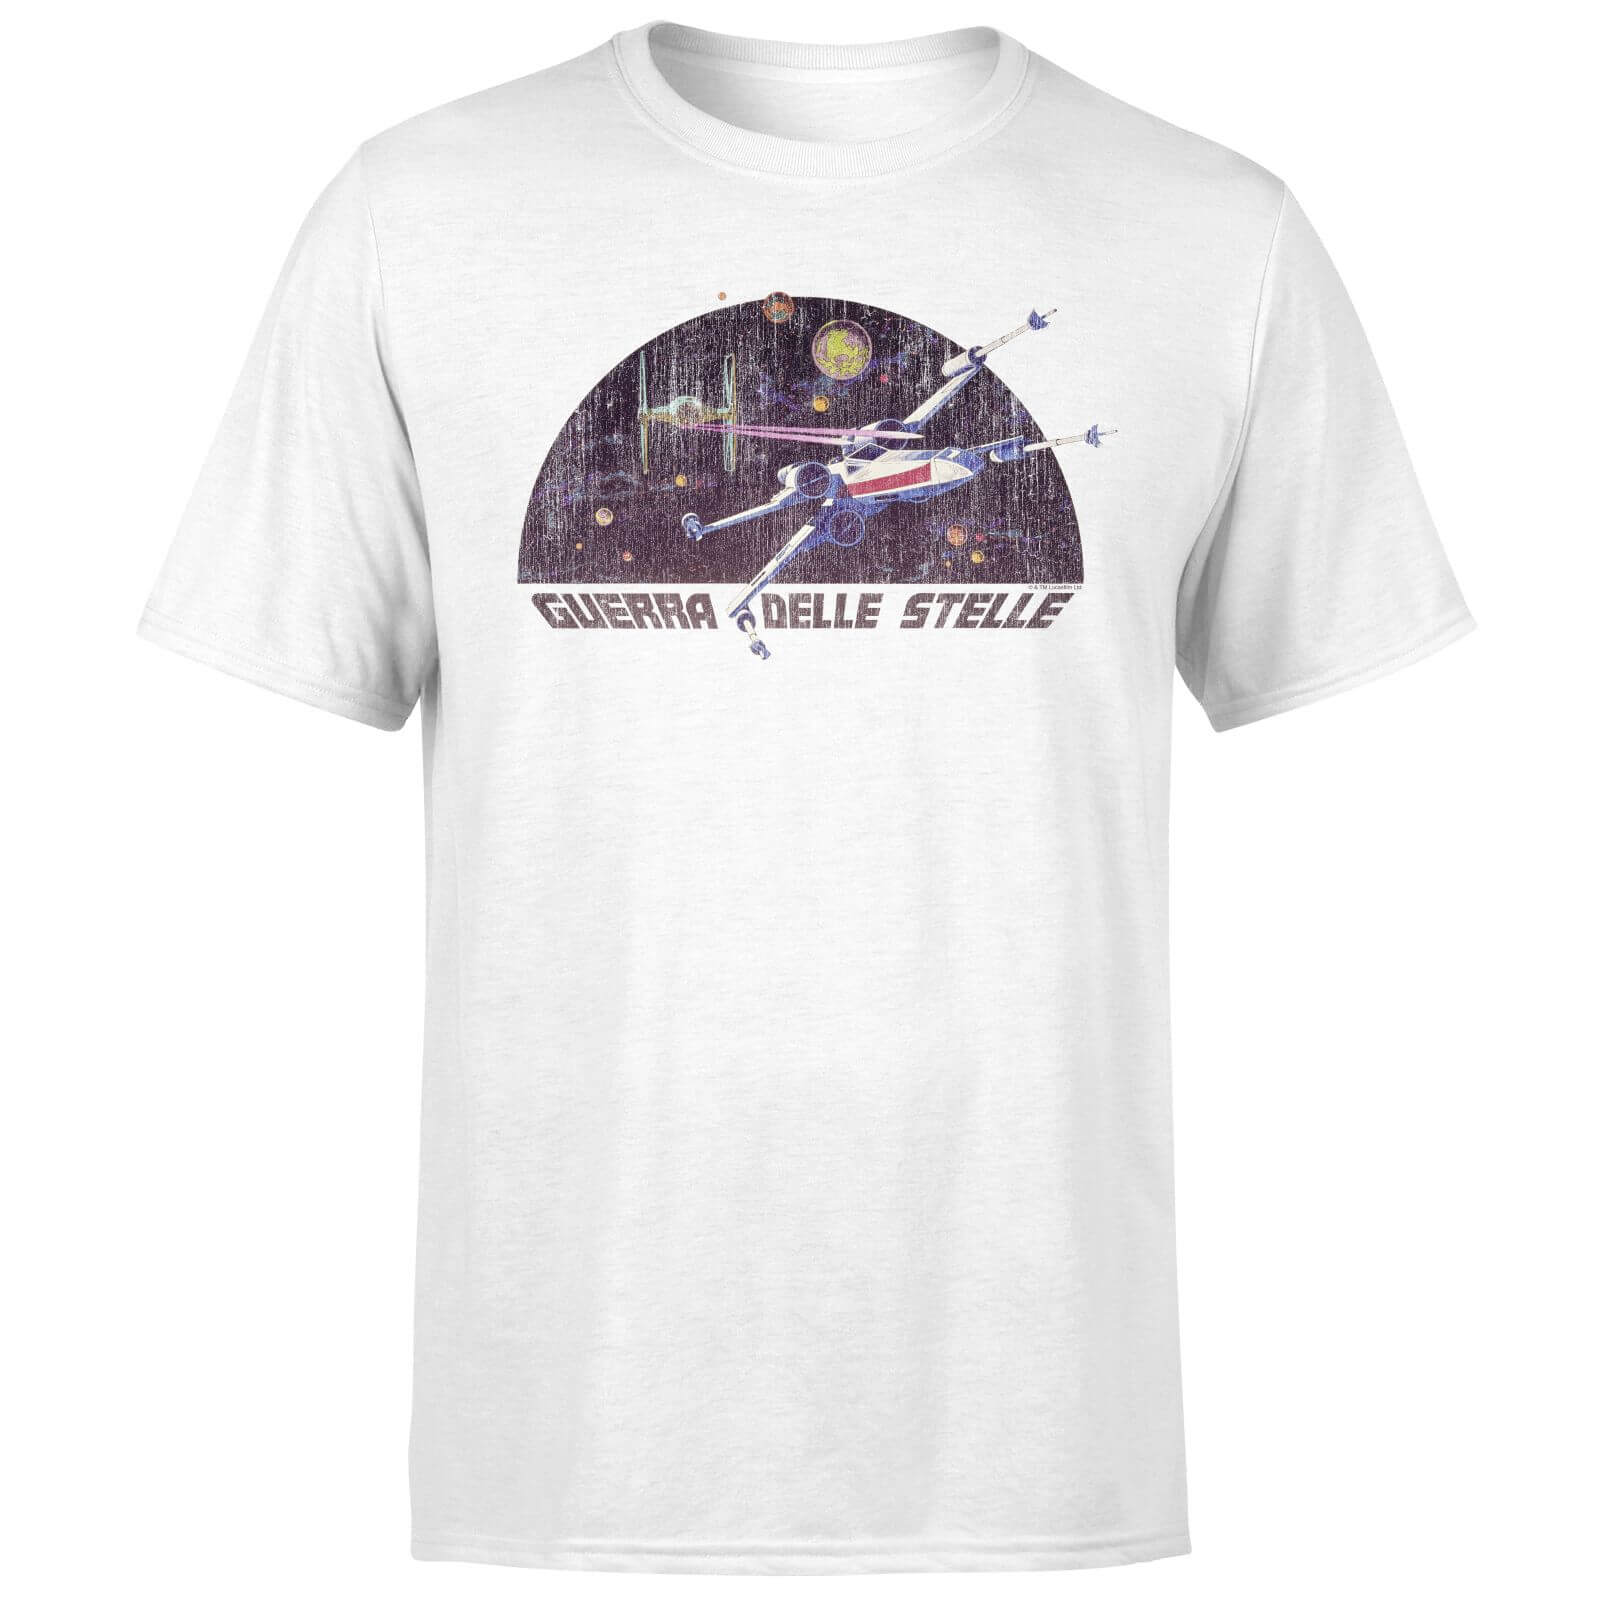 Star Wars X-Wing Italian Men's T-Shirt - White - XS